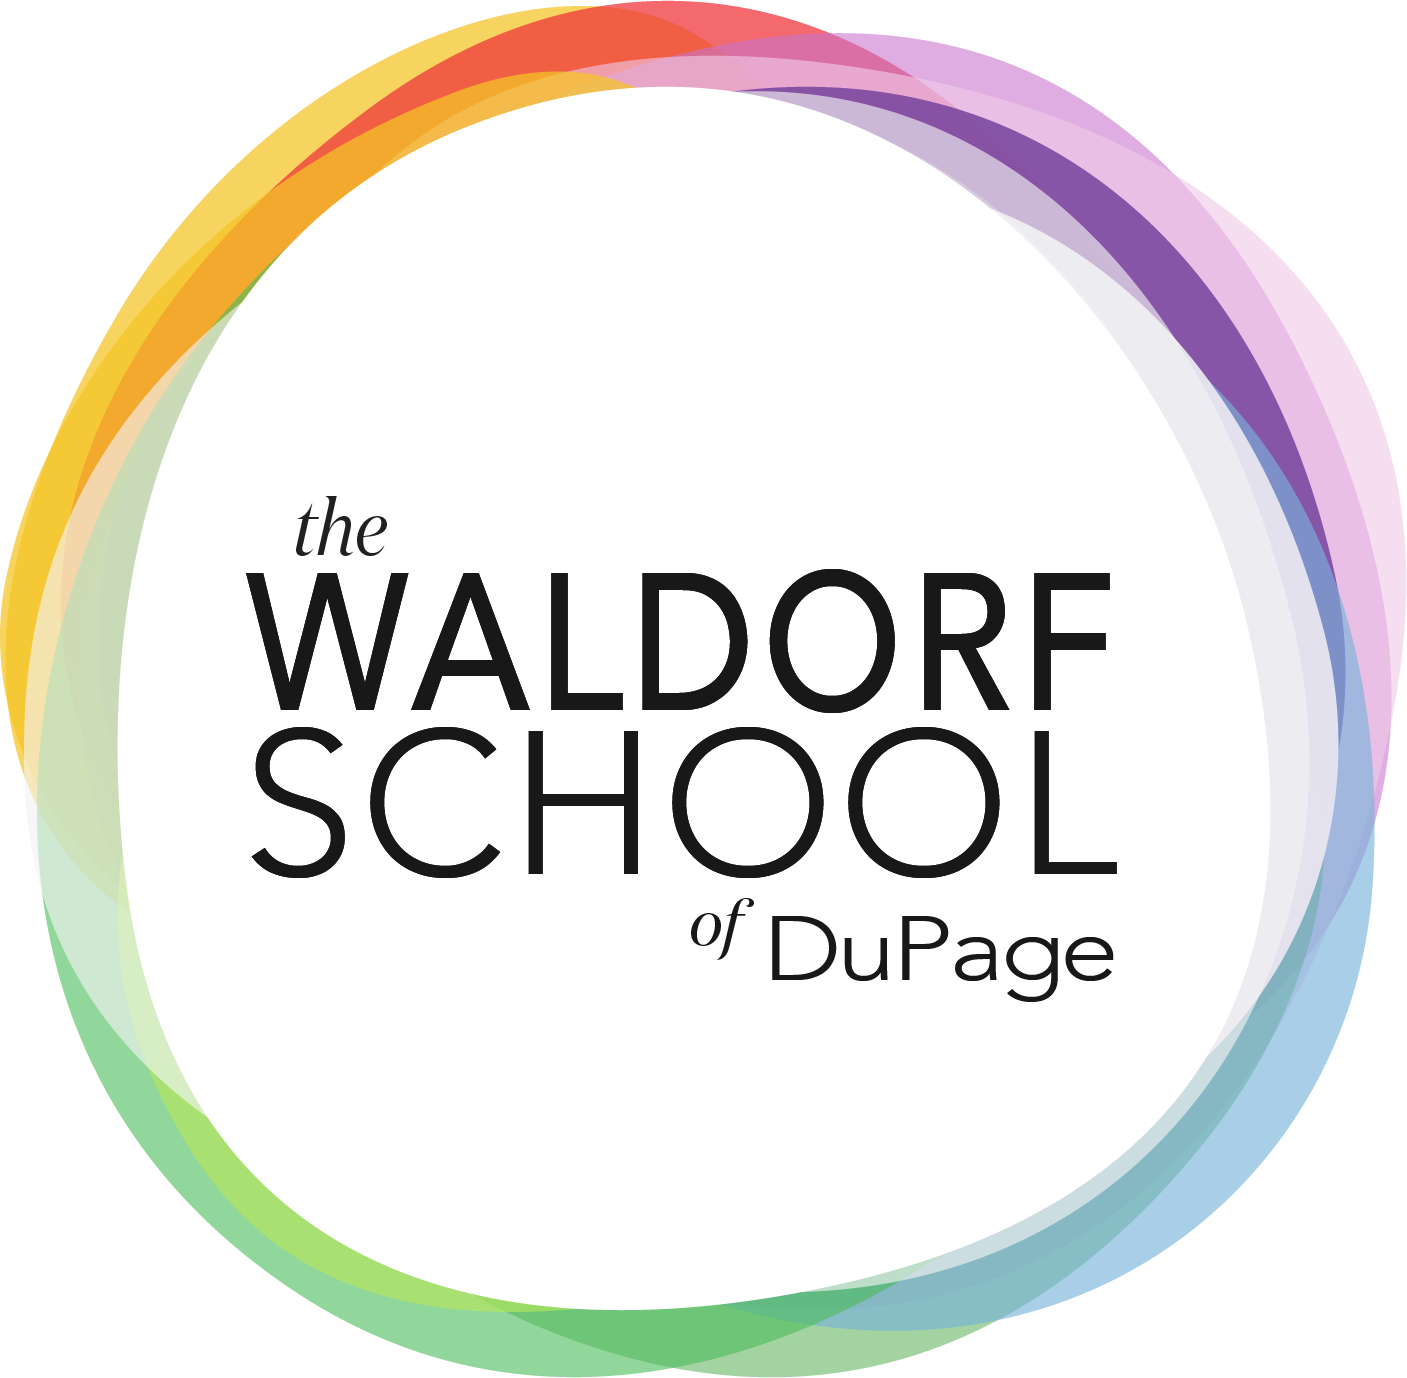 The Waldorf School of DuPage